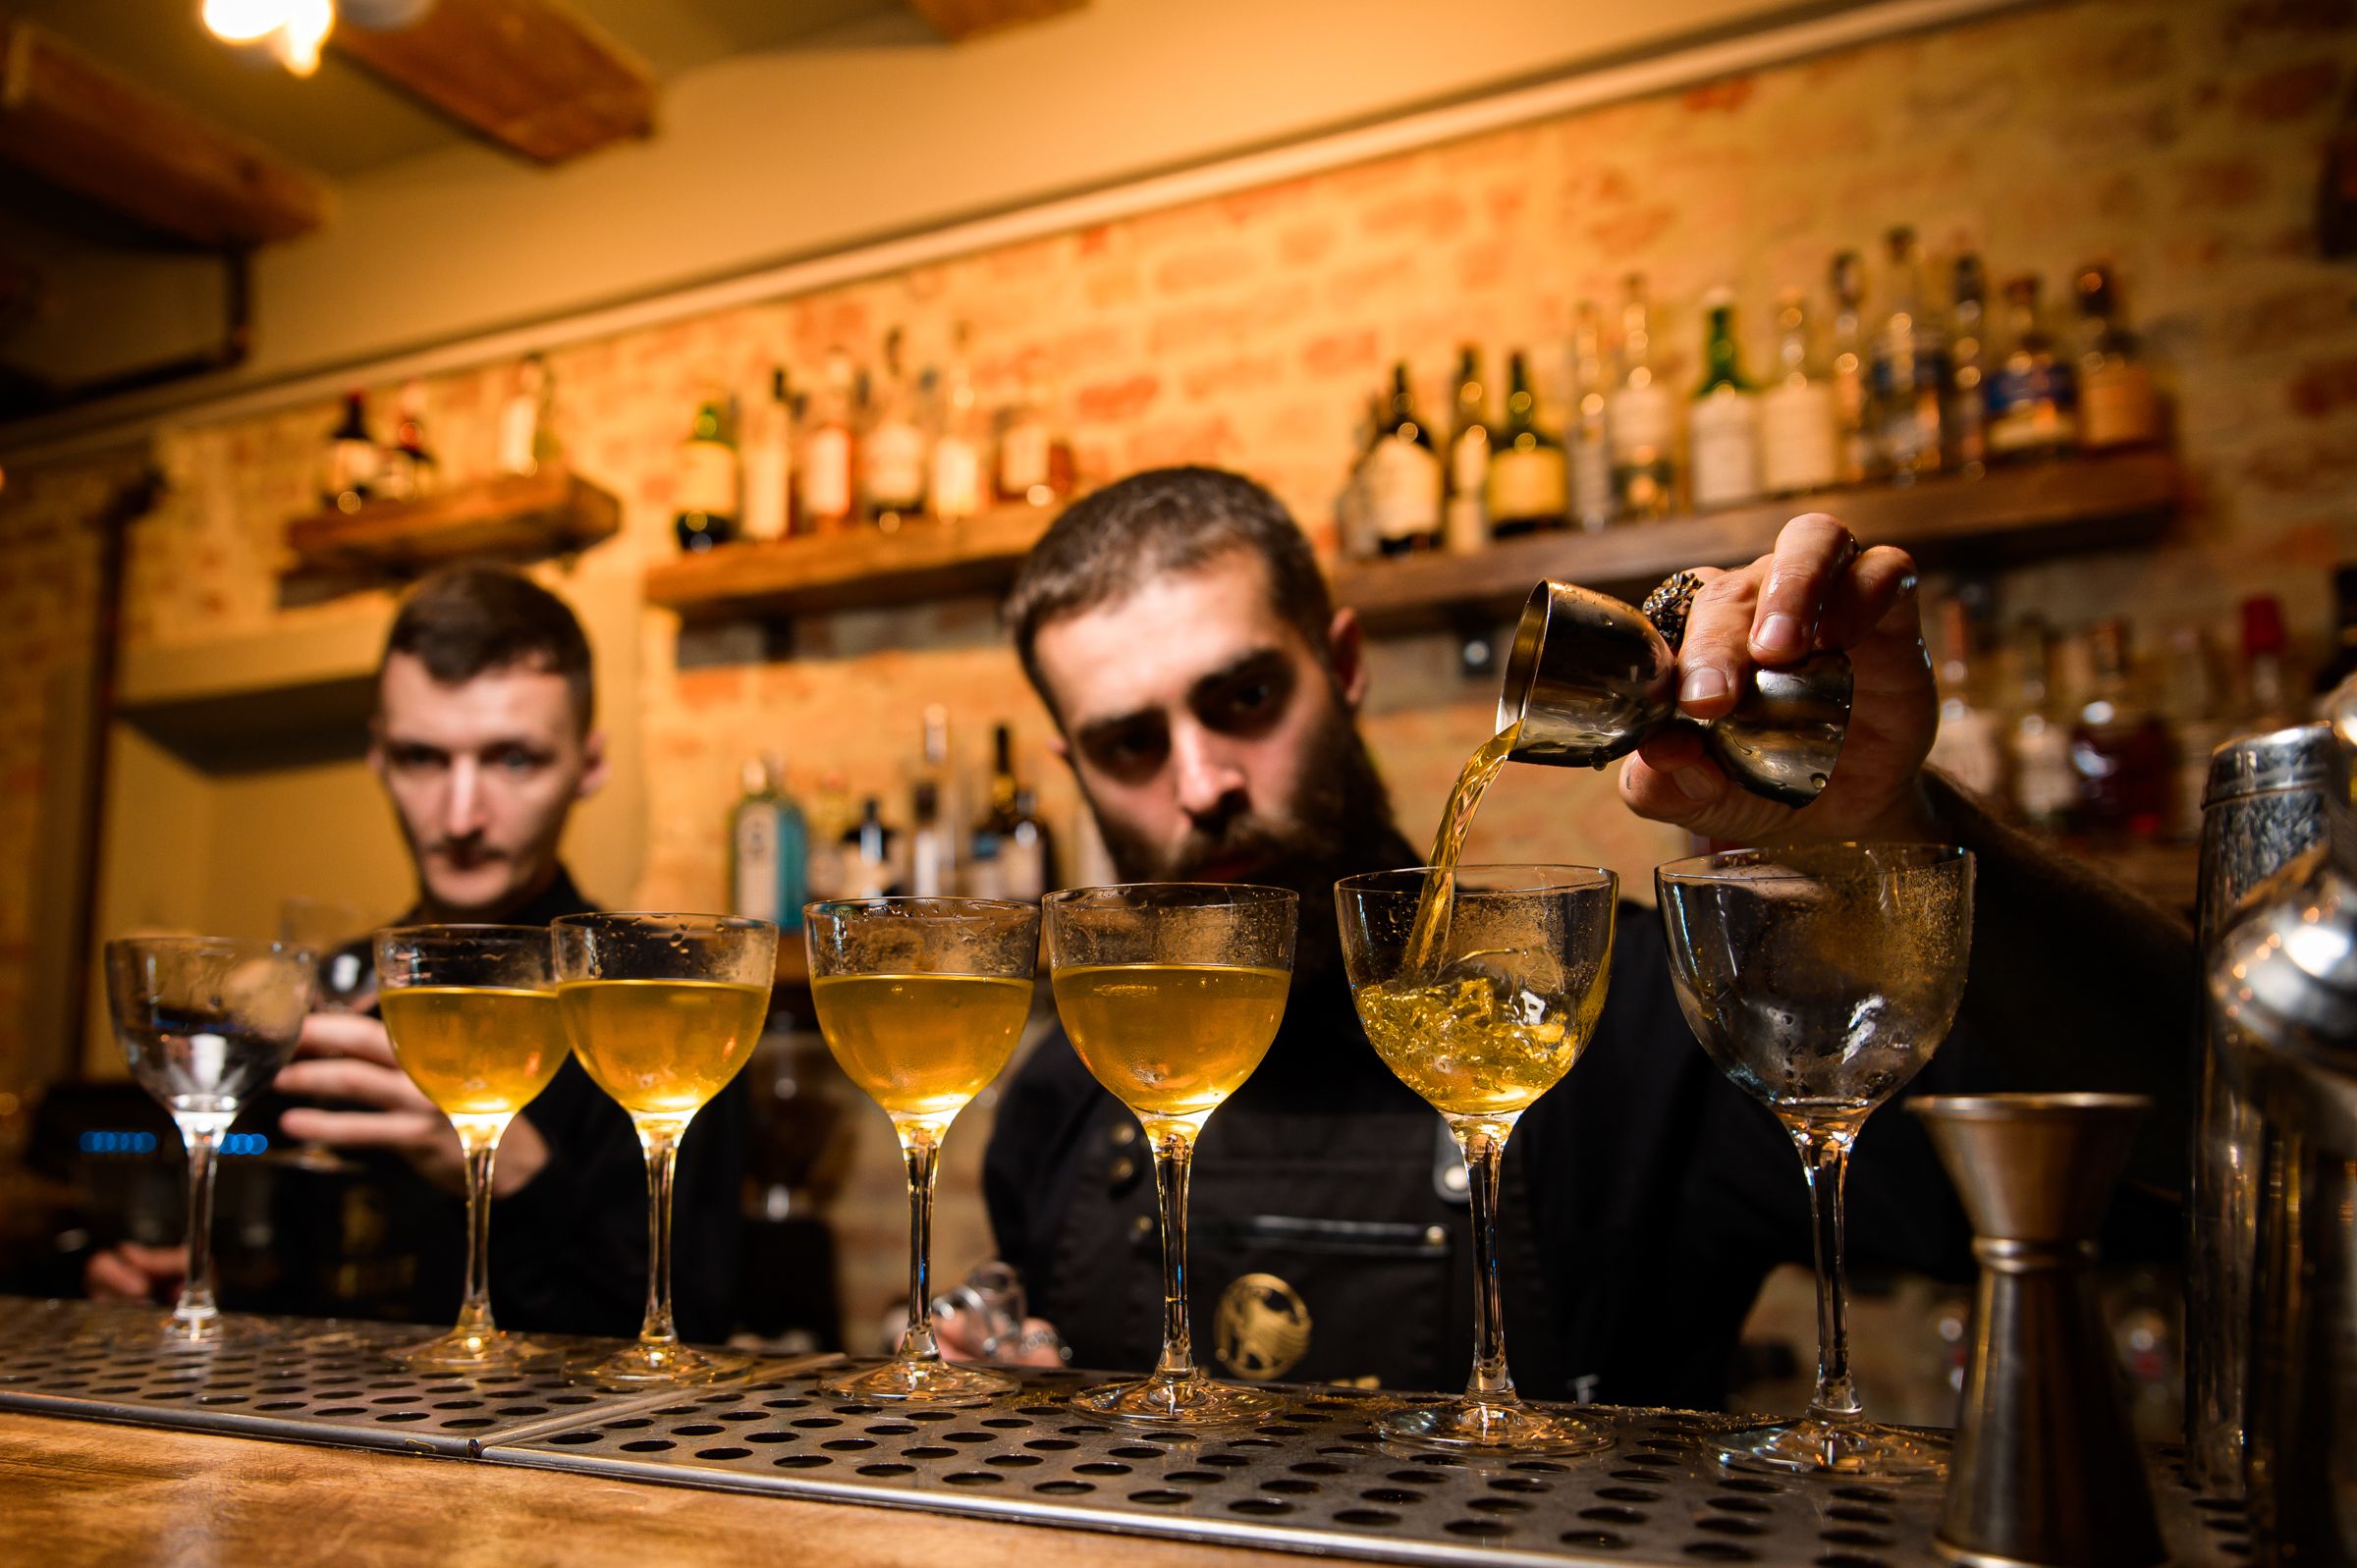 День благодарения бармена 2 декабря 2022 года - какие коктейли любят бартендеры и как их поблагодарить